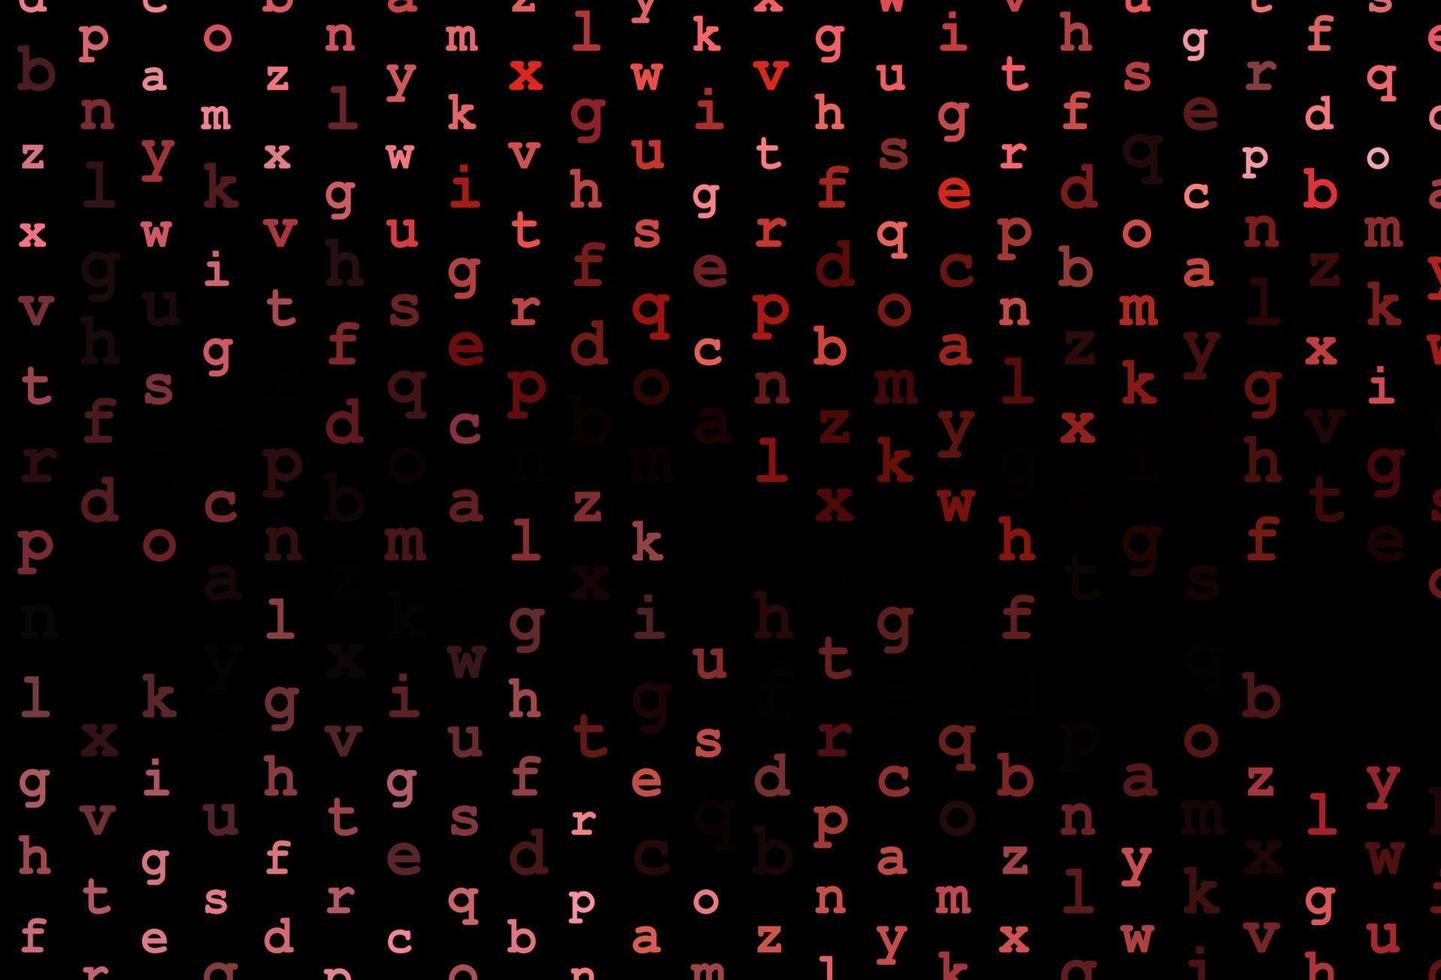 plantilla de vector rojo oscuro con letras aisladas.